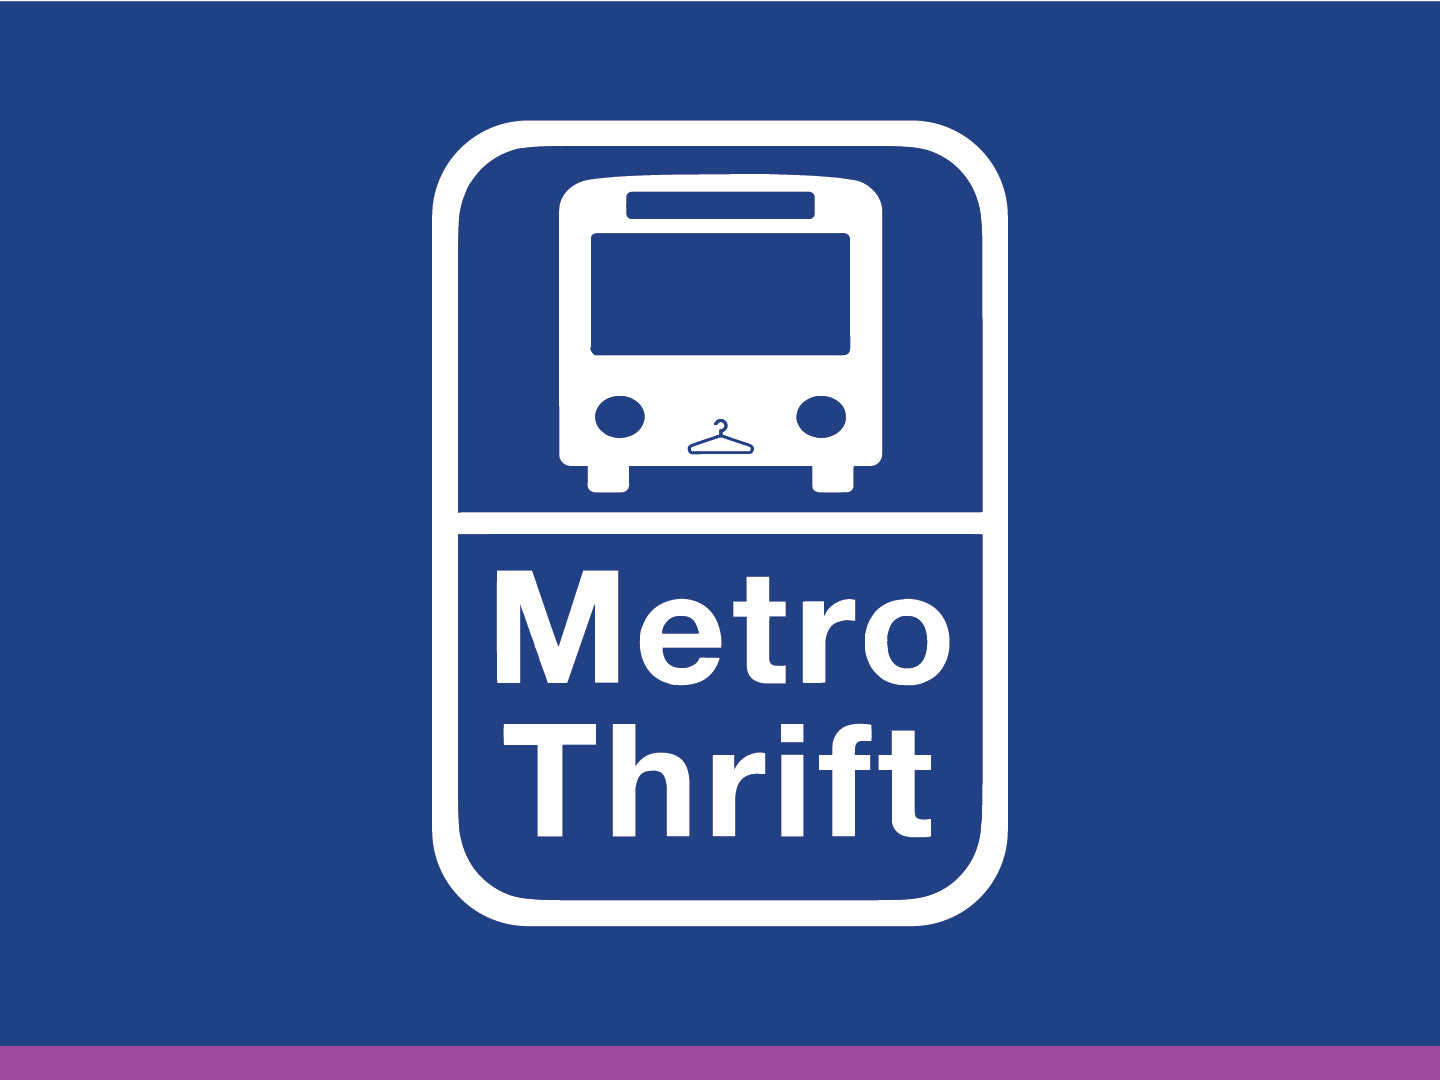 Metro Thrift Bus